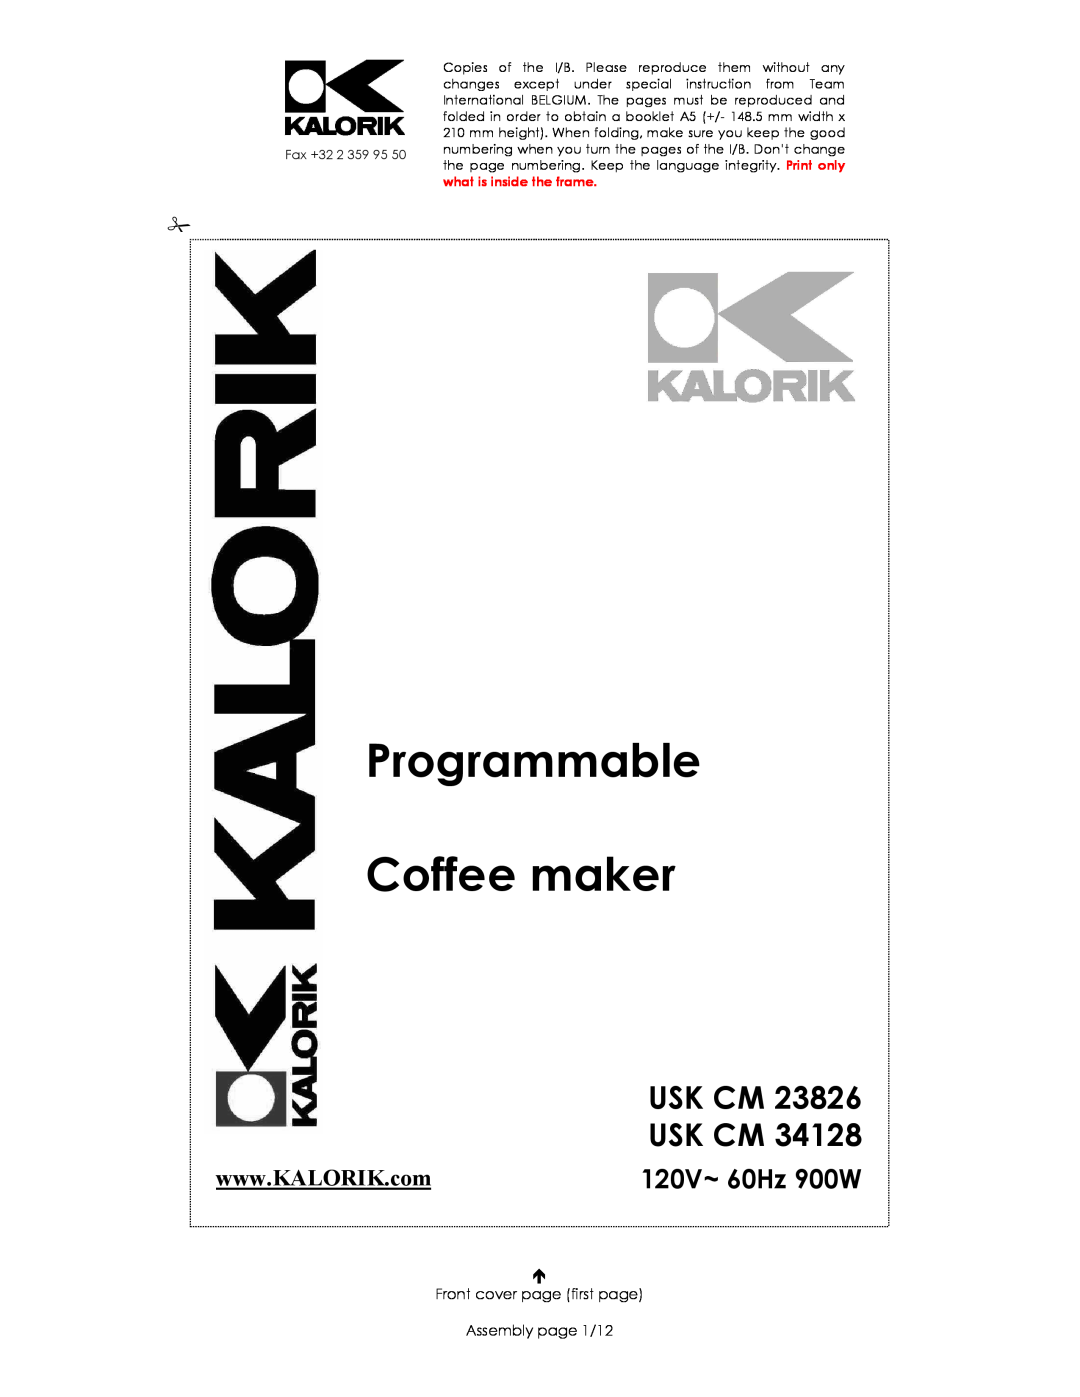 Kalorik USK CM 23826, USK CM 34128 manual 120V~ 60Hz 900W, Programmable Coffee maker, Usk Cm Usk Cm 